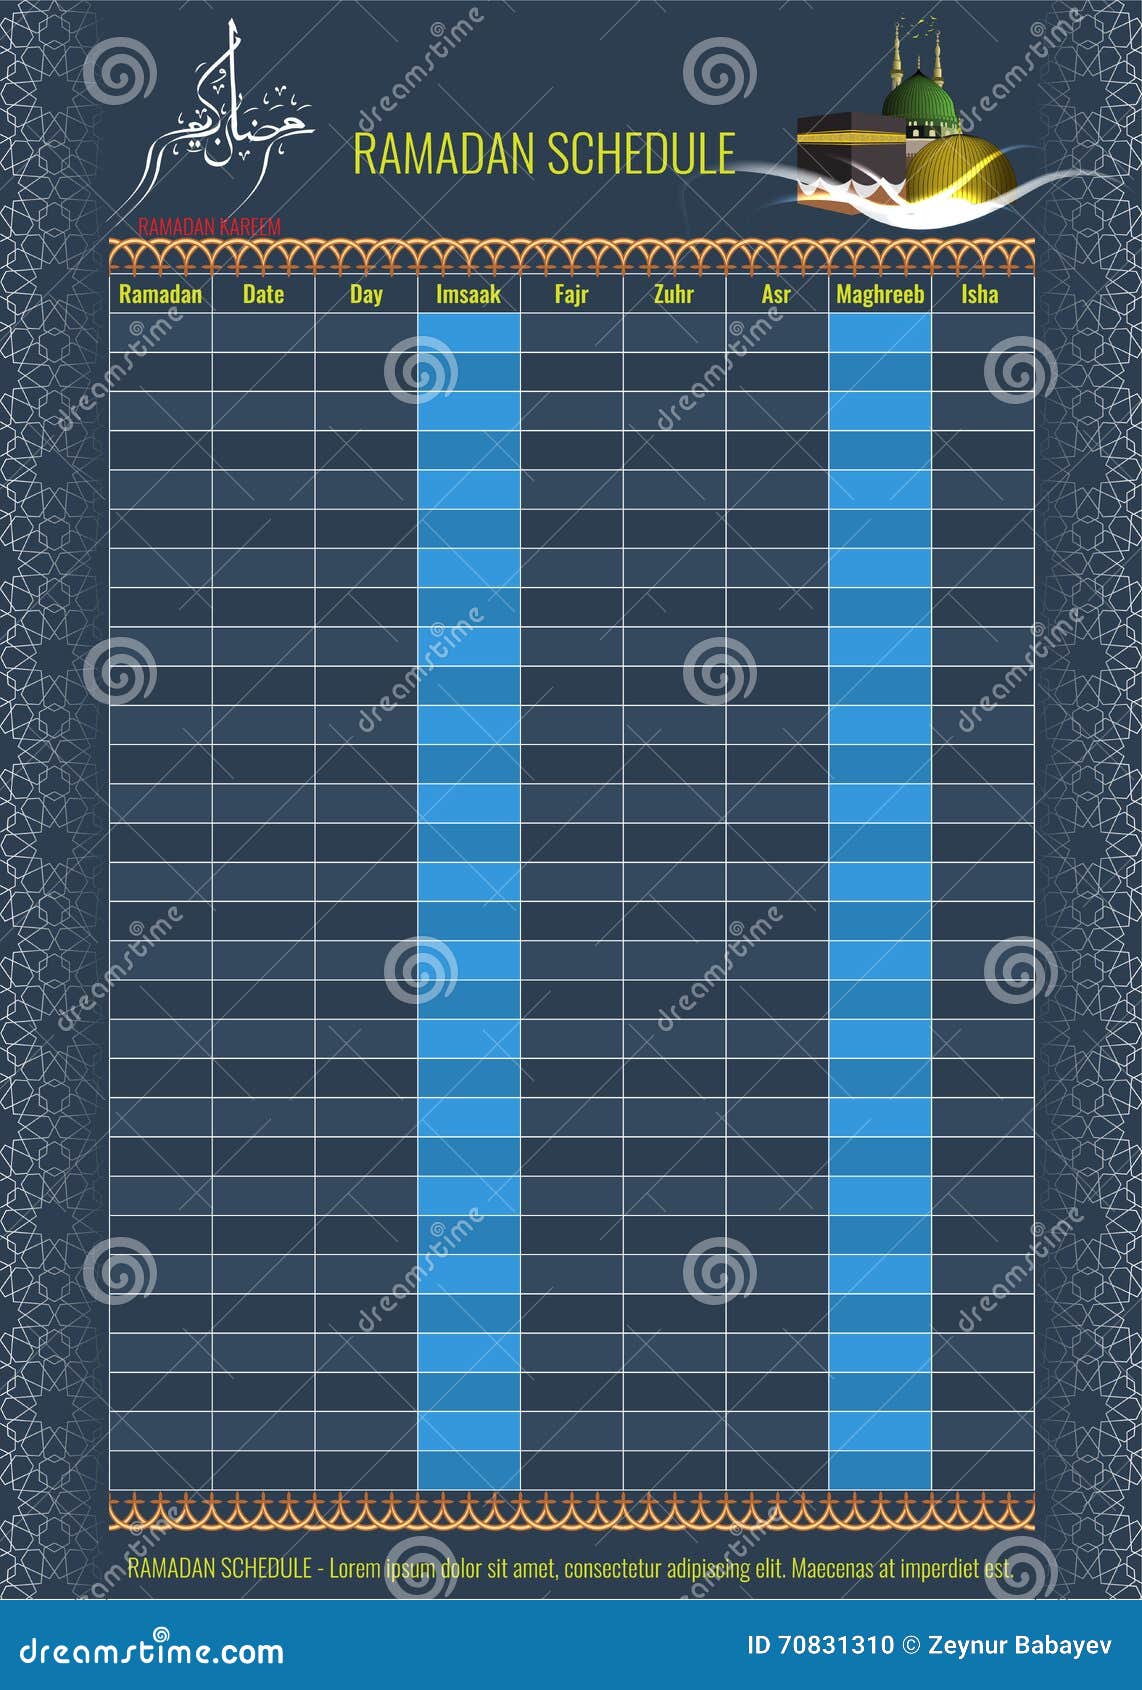 Ramadan Calendar Schedule Fasting and Prayer Time Guide Stock